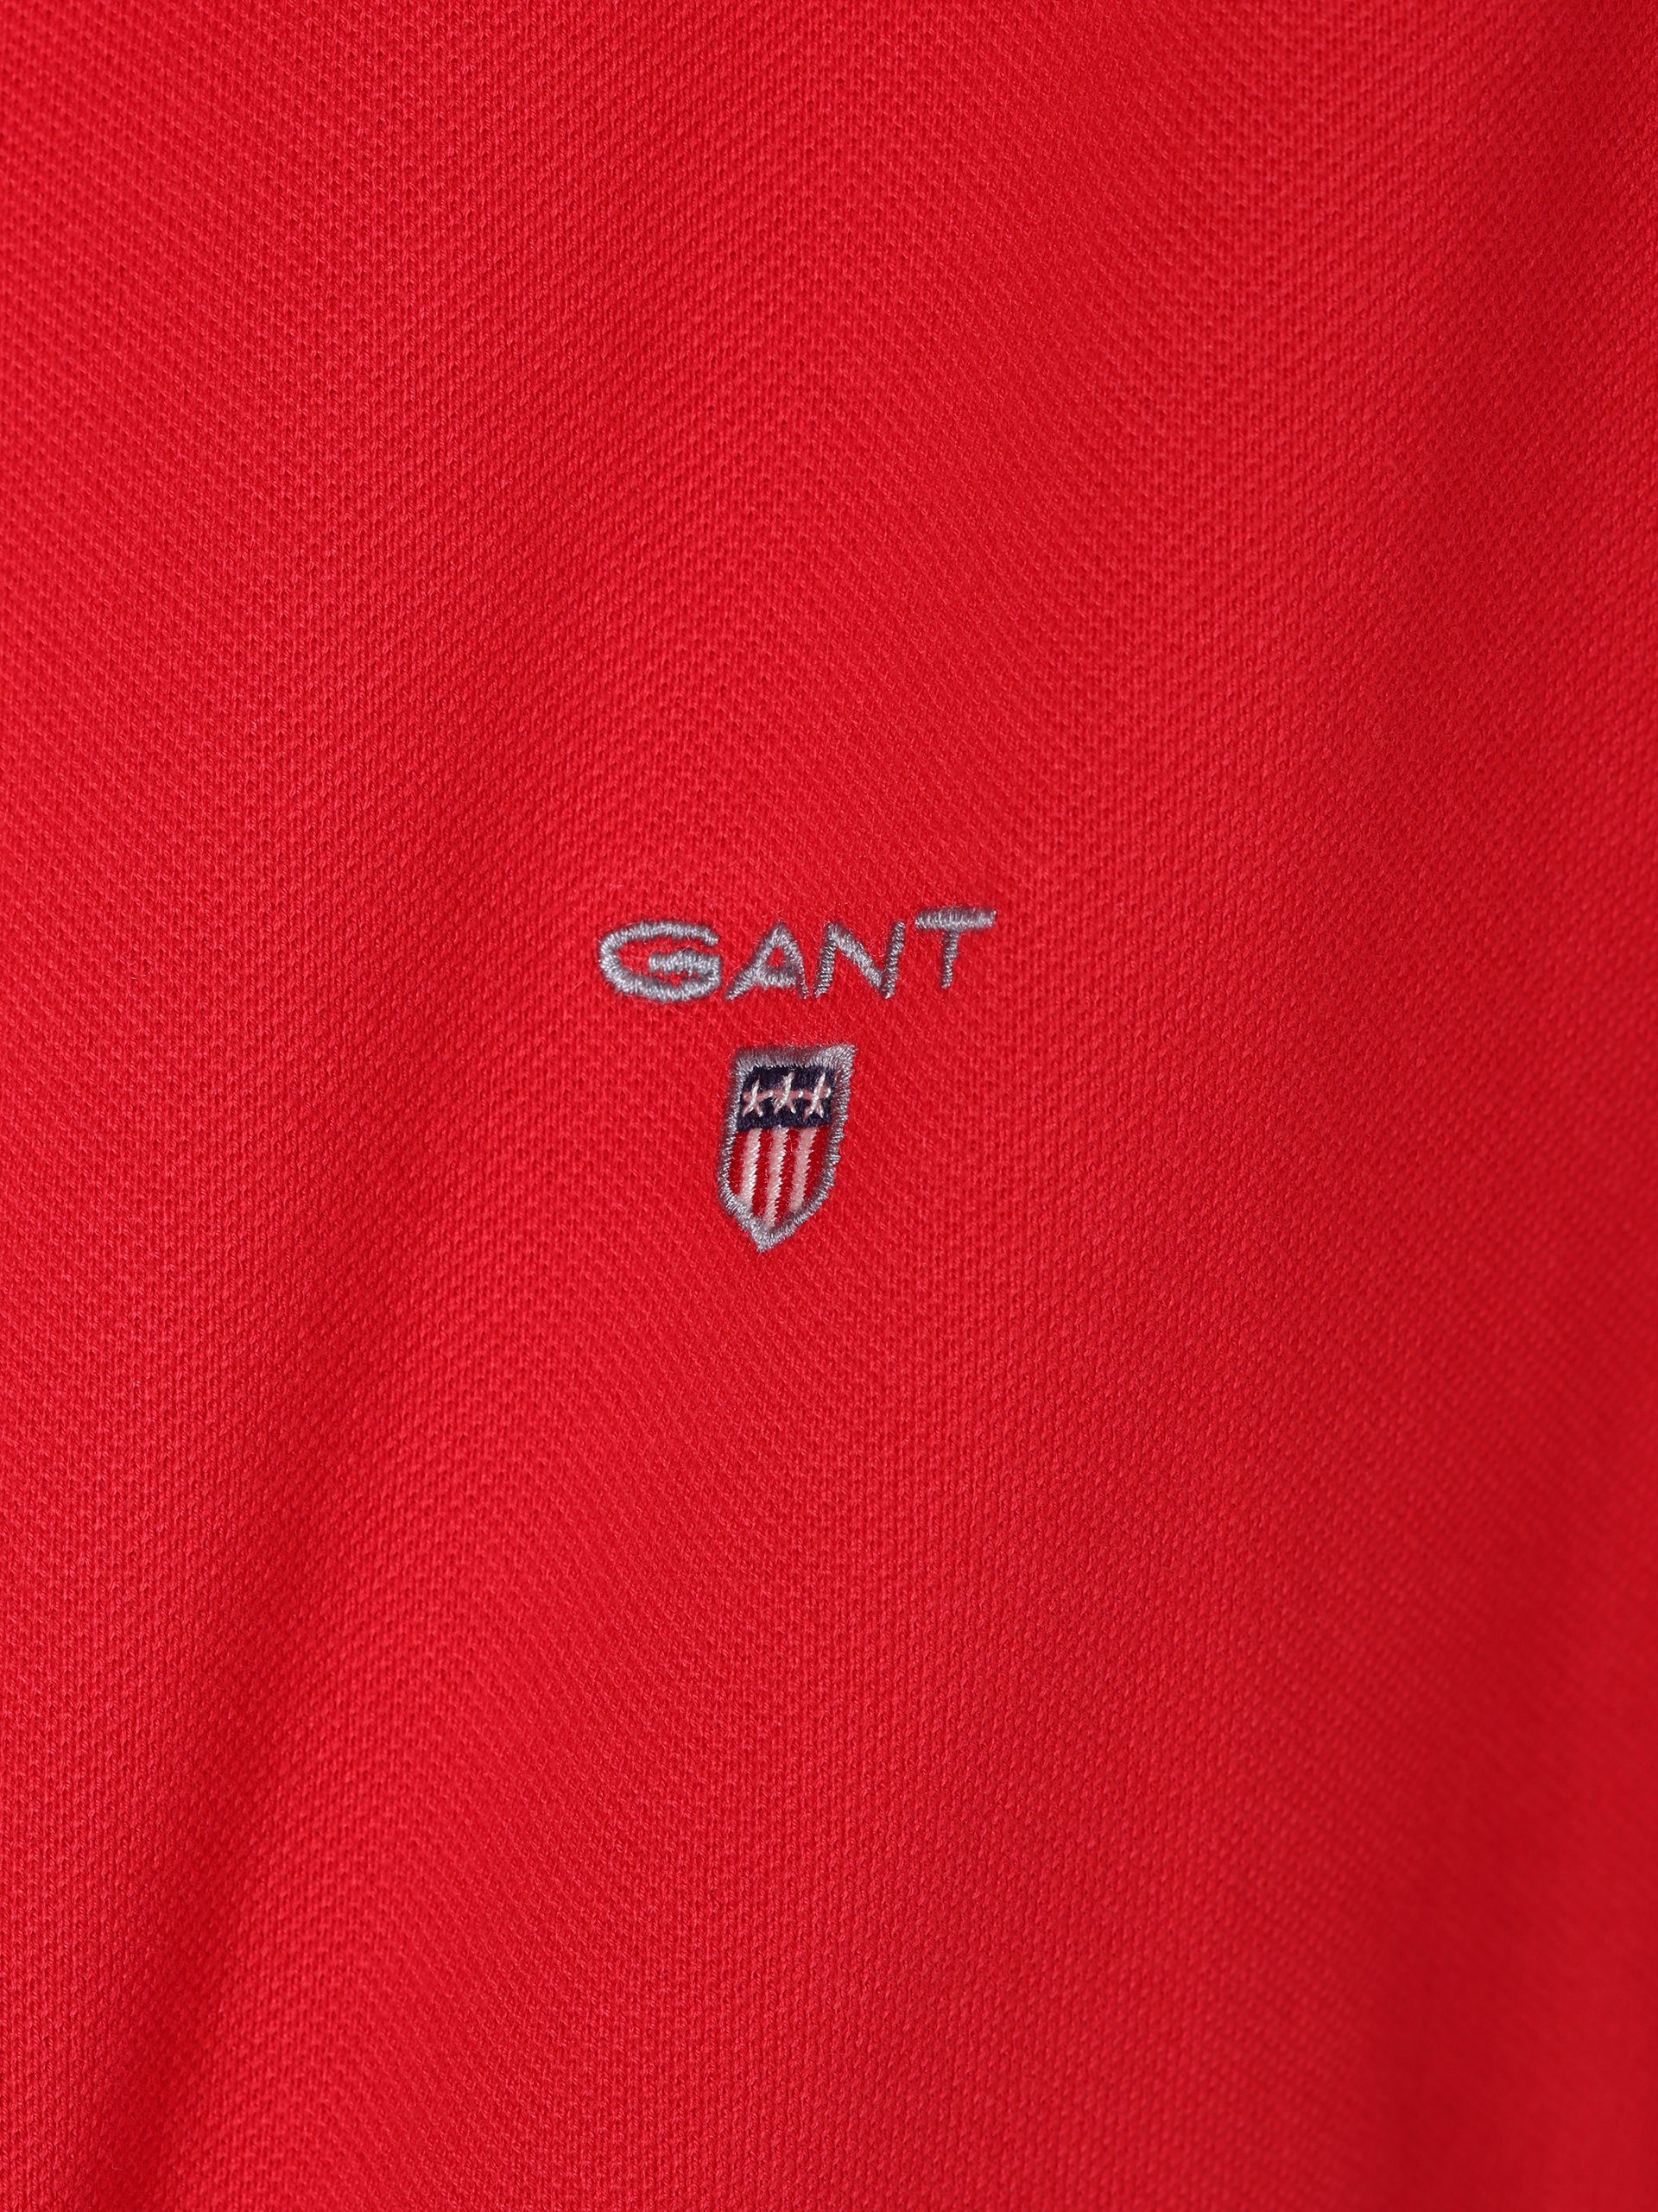 Poloshirt rot Gant